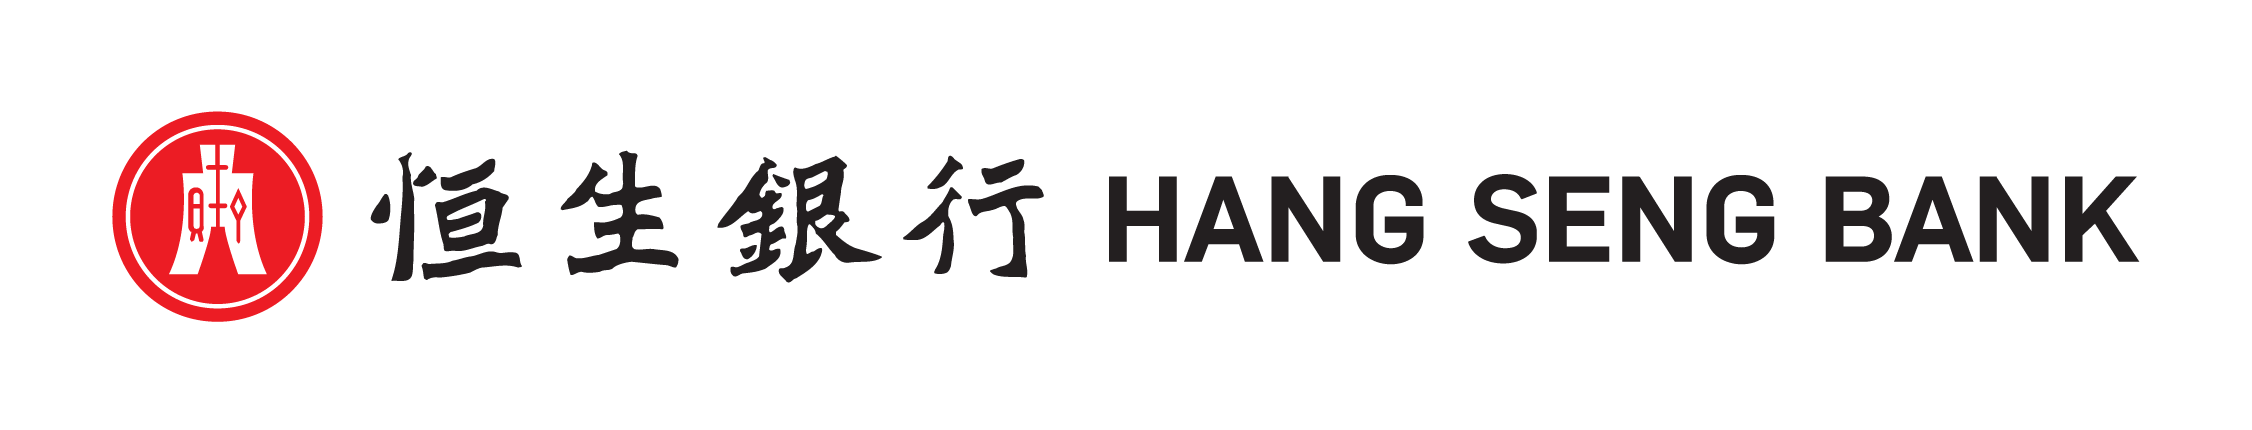 恒生銀行 HANG SENG BANK